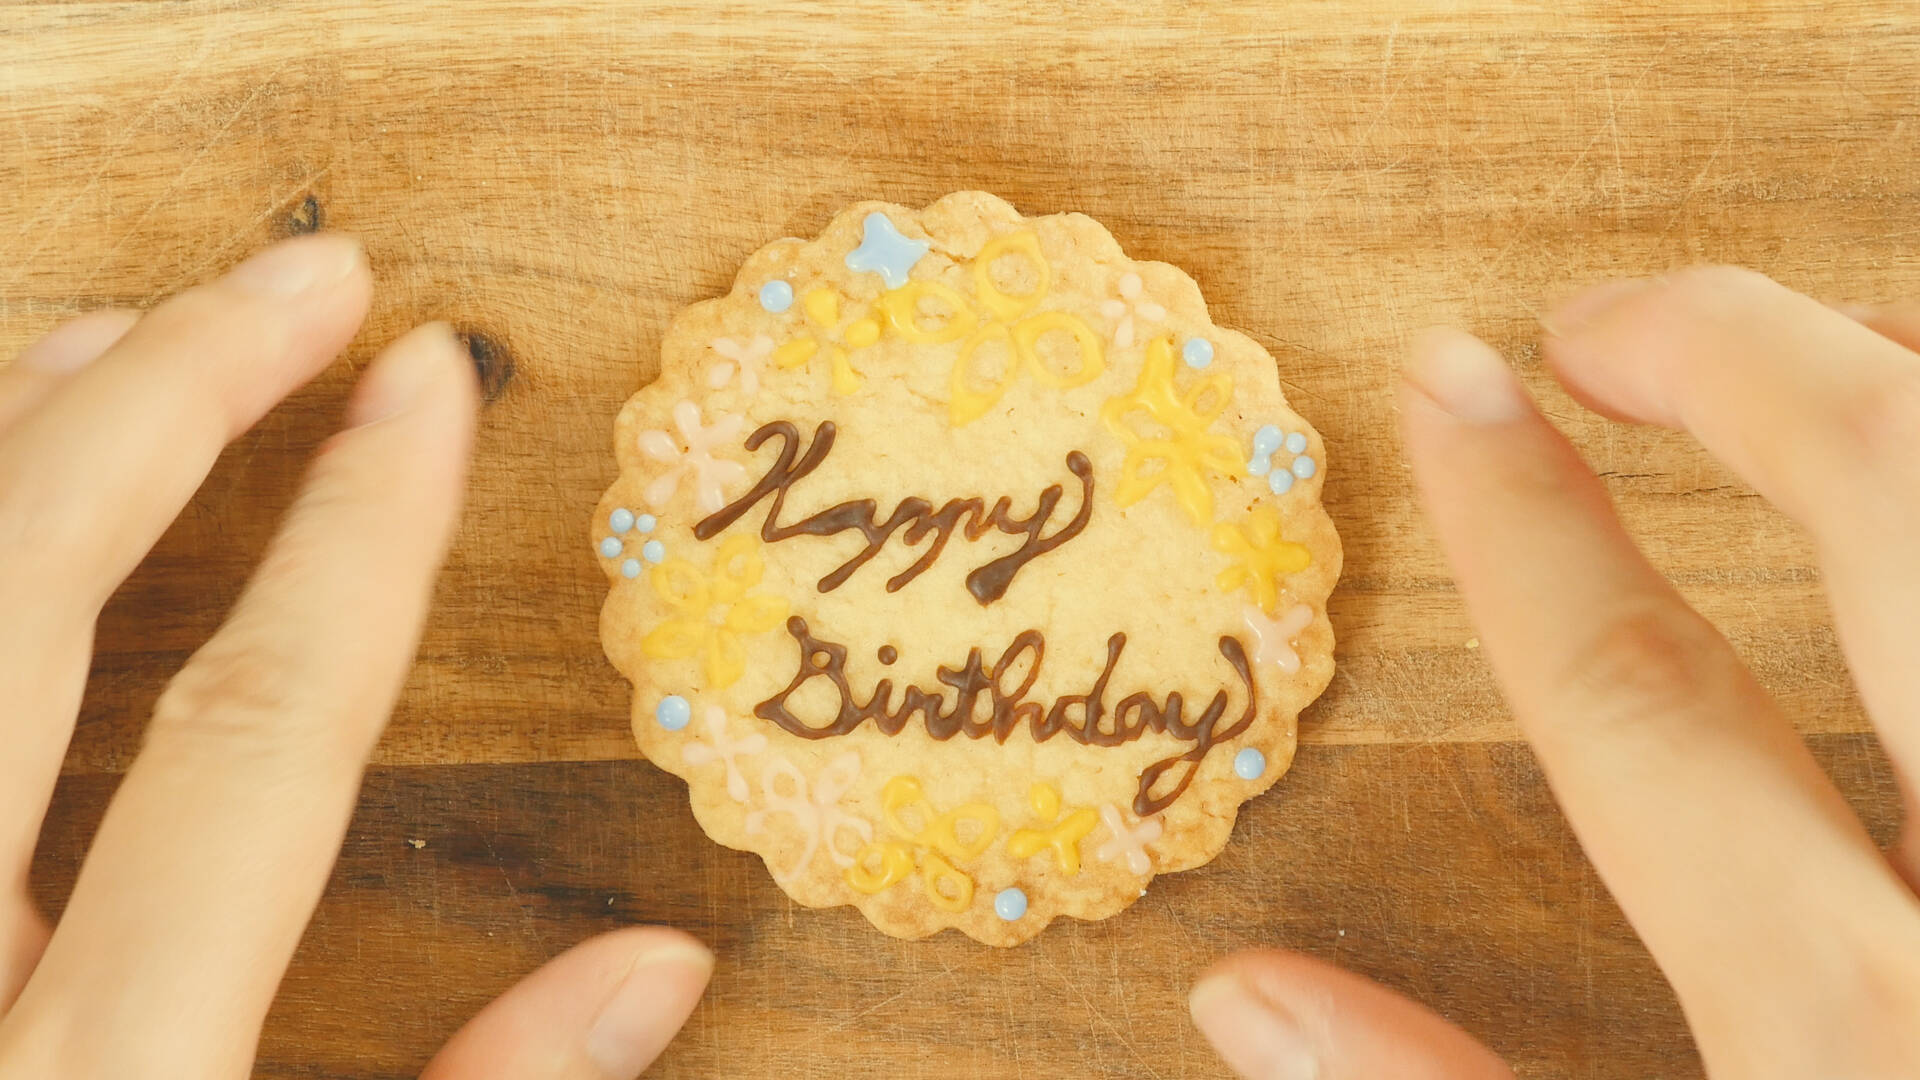 Happy Birthday 誕生日を祝うアイシングクッキー 17年11月日 エキサイトニュース